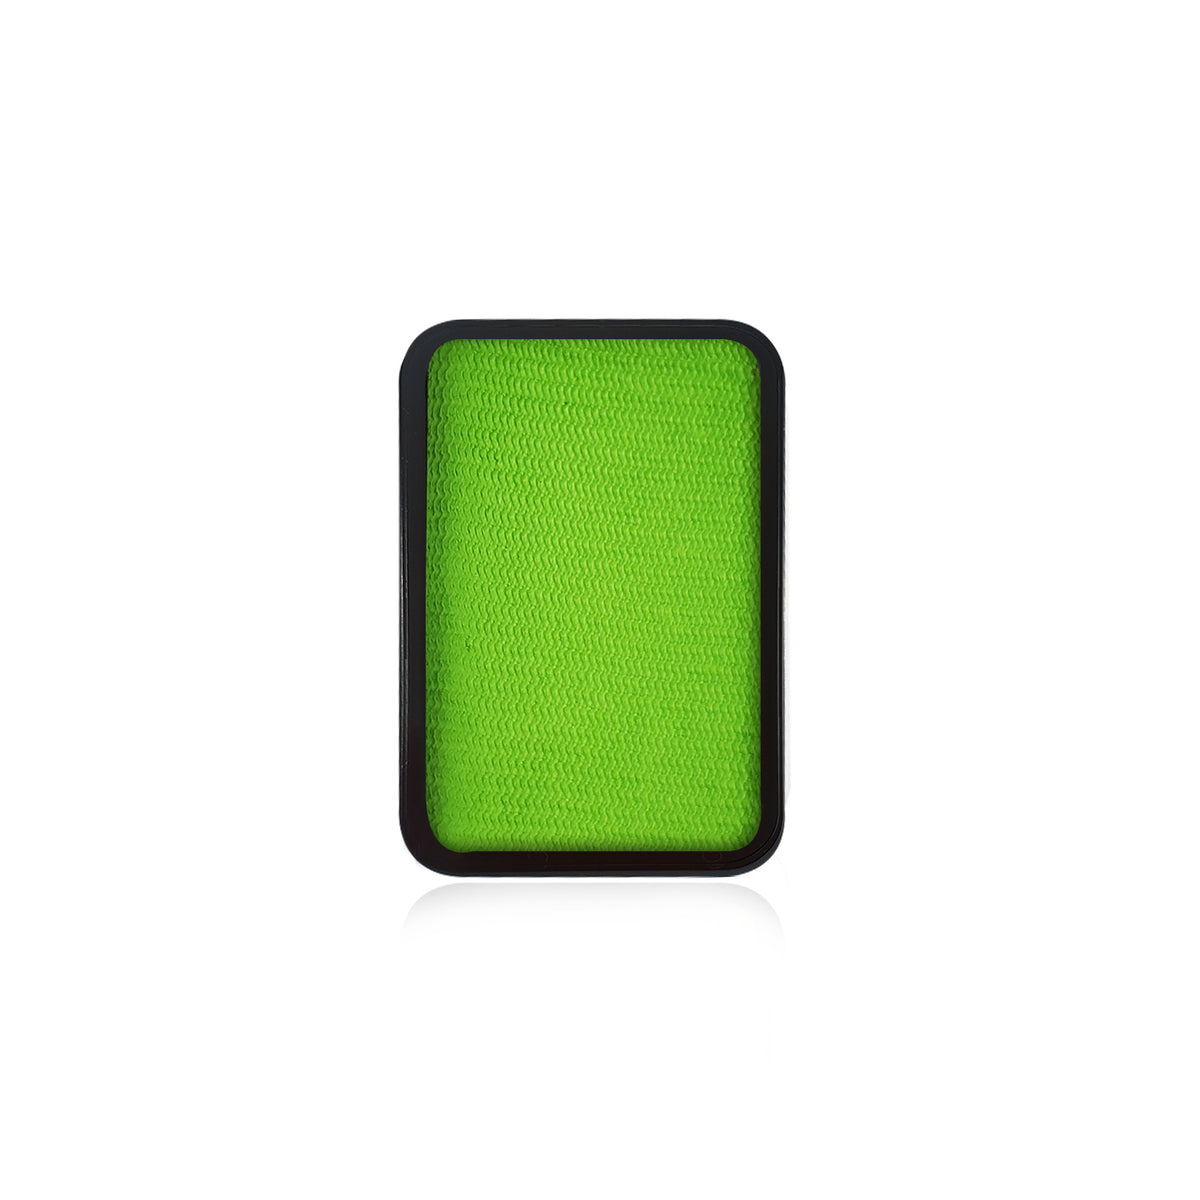 Kraze Face Paint Palette Refill - Lime Green (0.35 oz/10 gm)